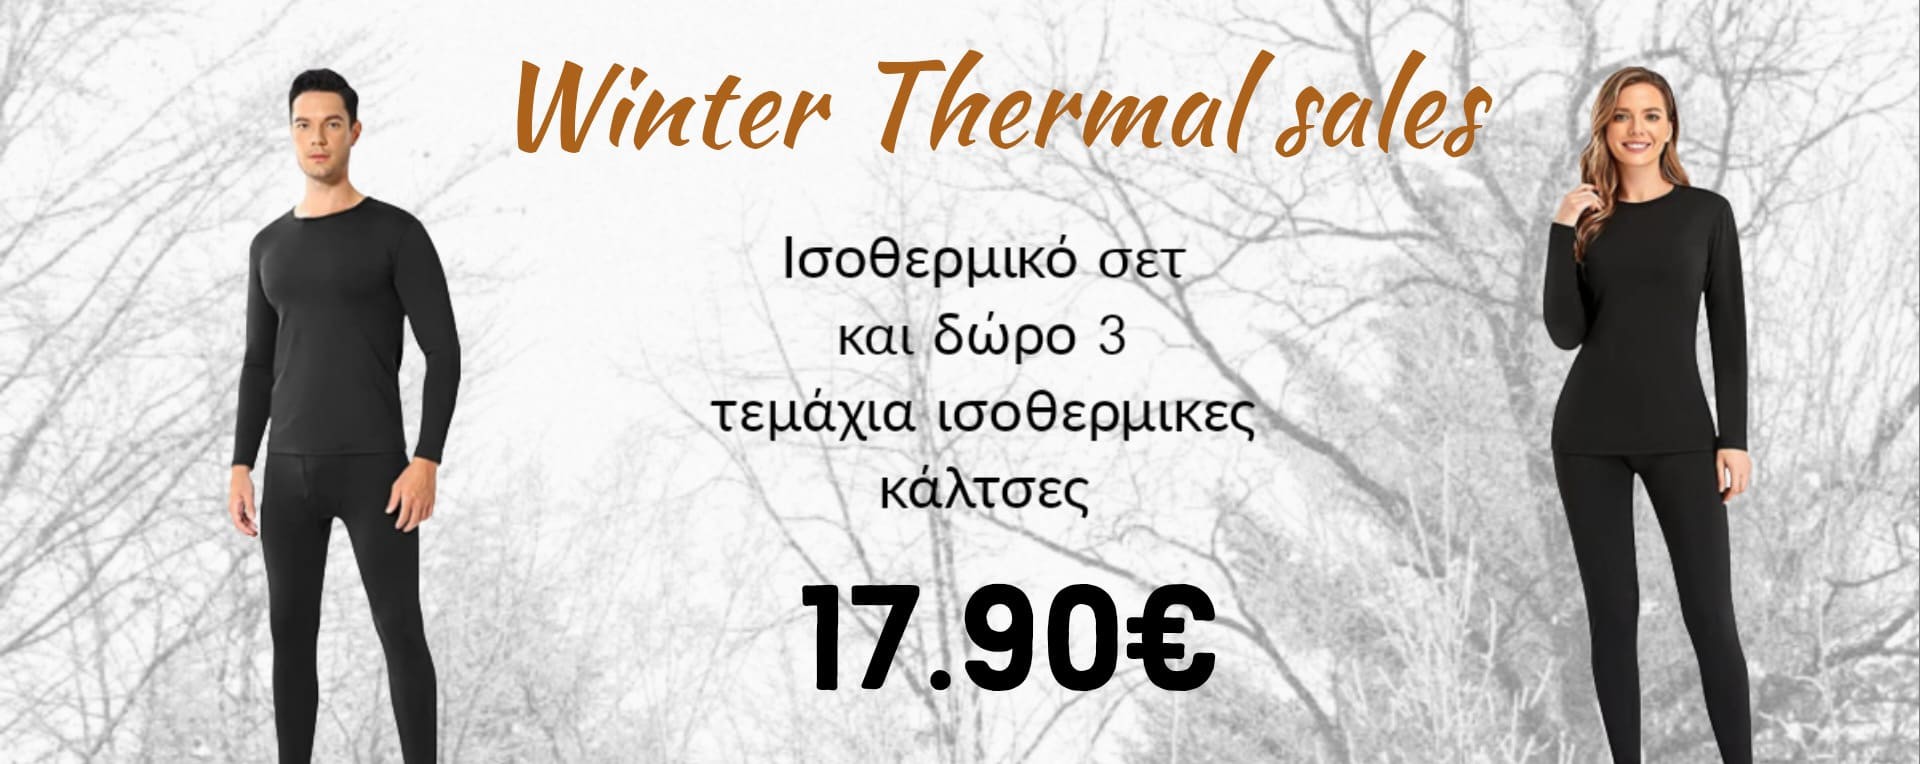 Winter Thermal